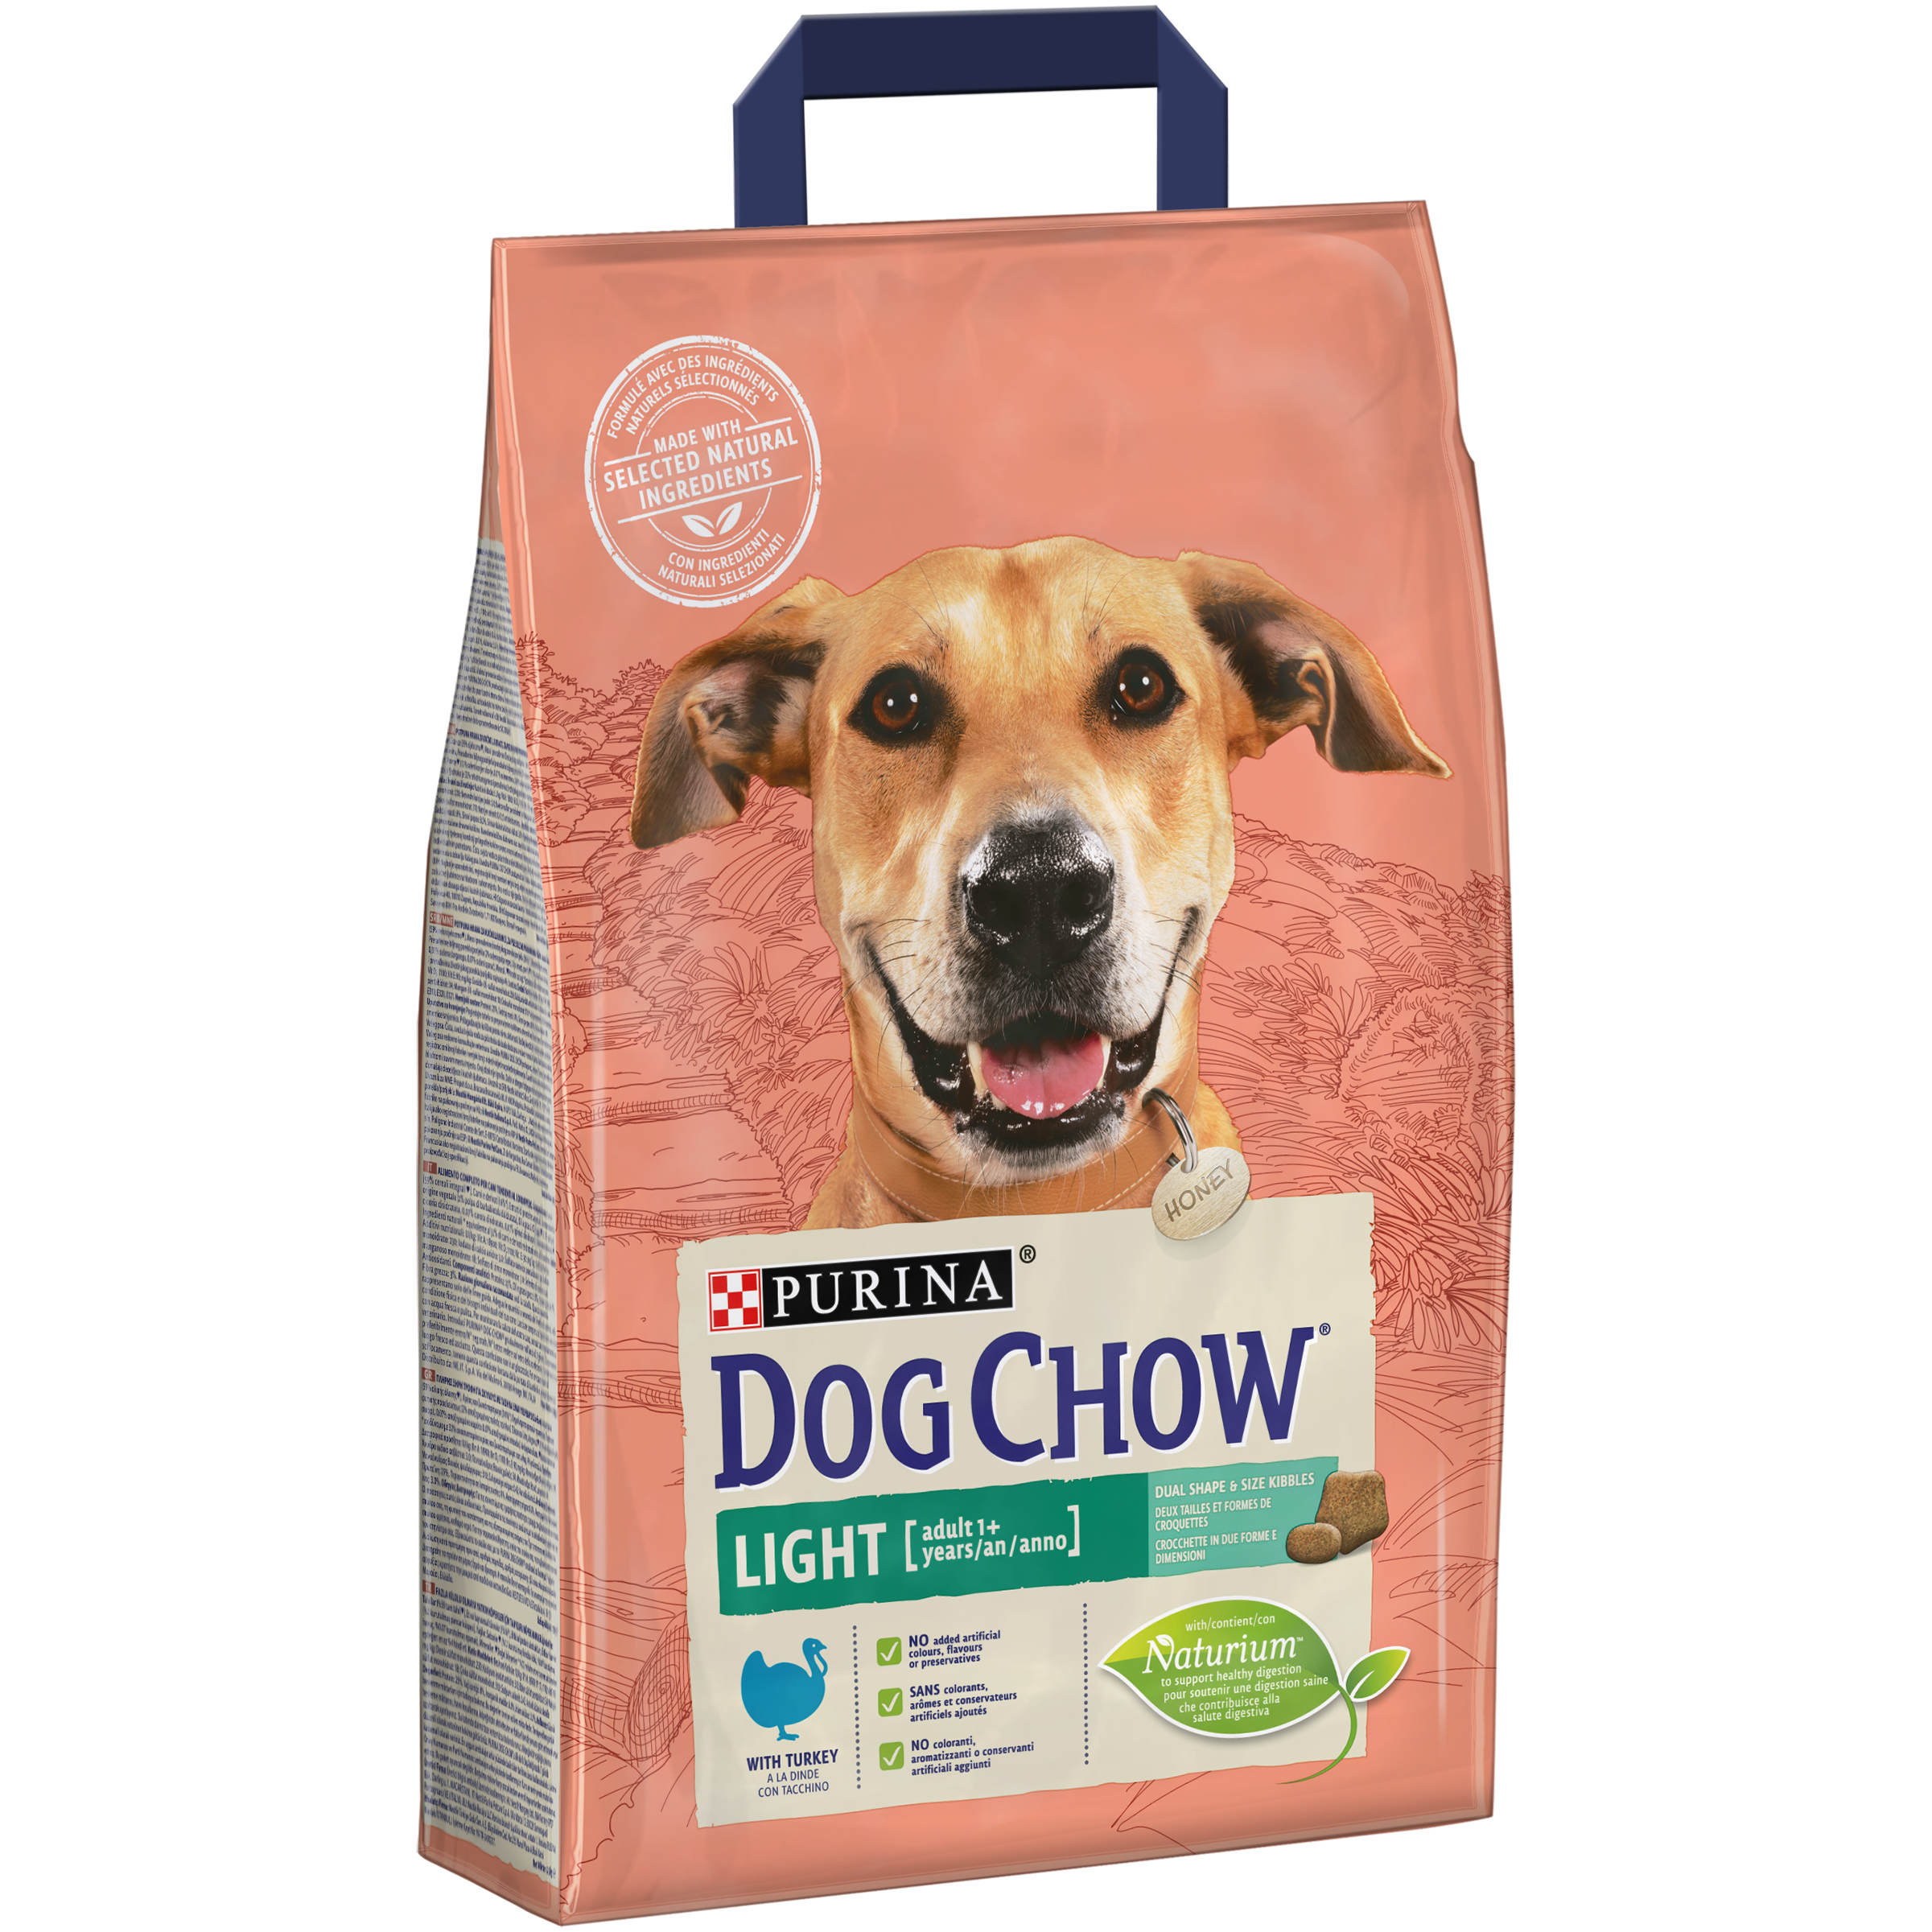 DOG CHOW LIGHT, Curcan, 2.5 kg